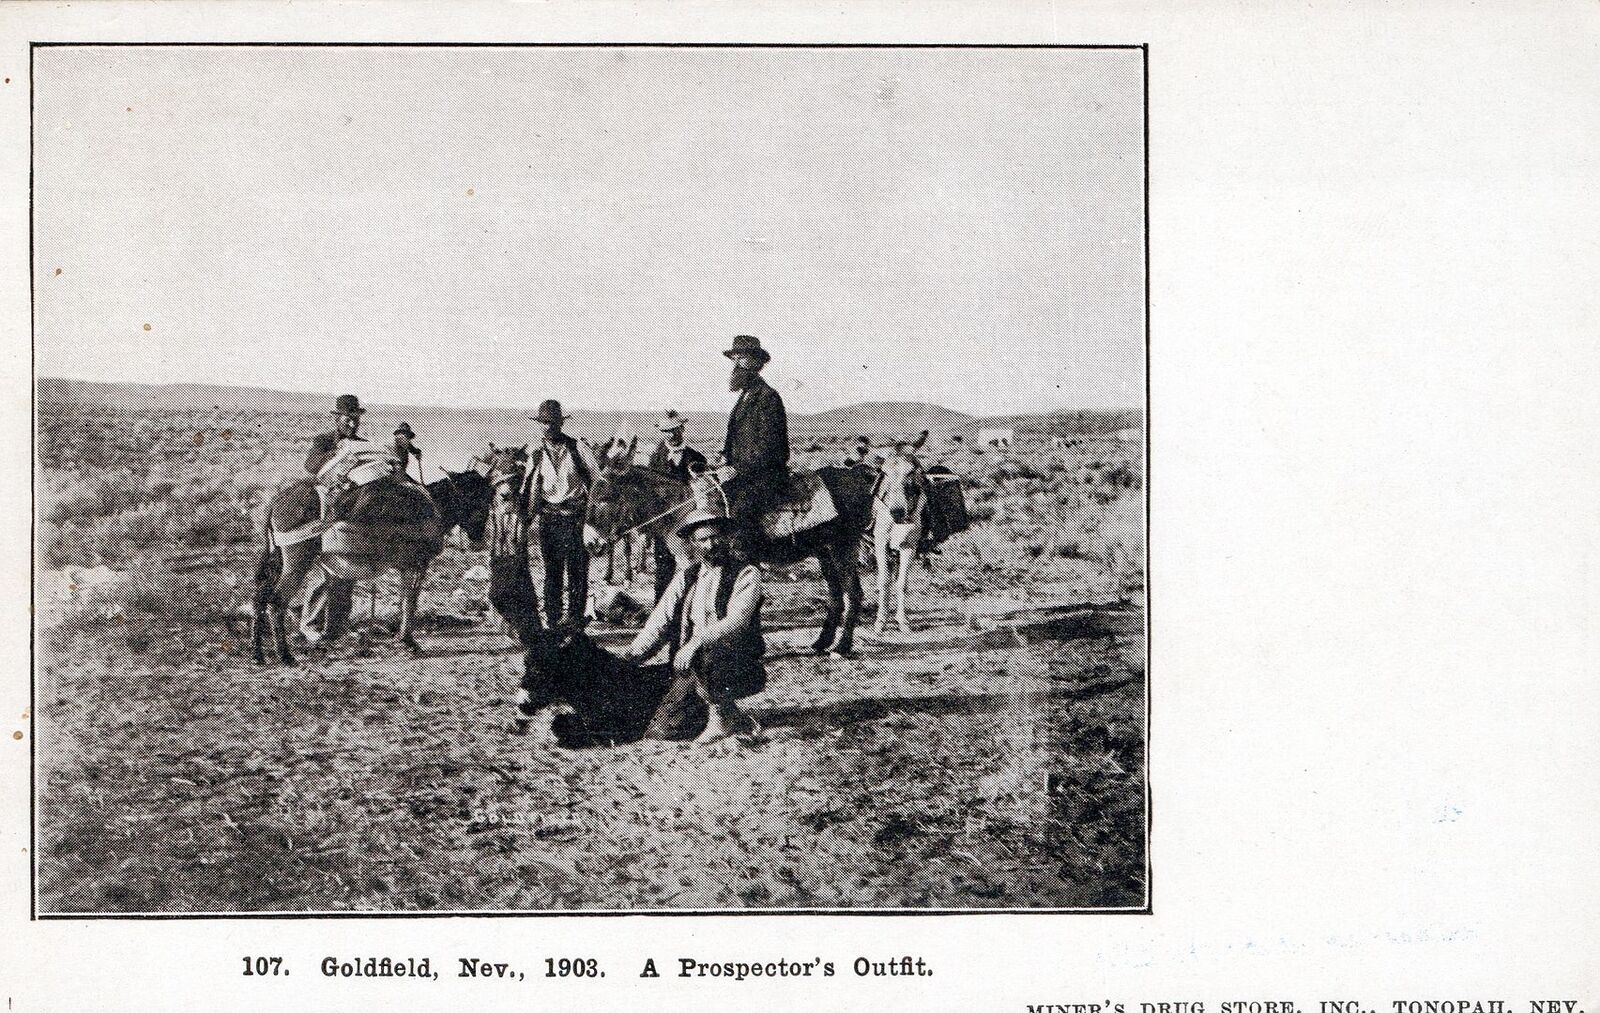 GOLDFIELD NV - Goldfield November 1903 A Prospector's Outfit Postcard - udb